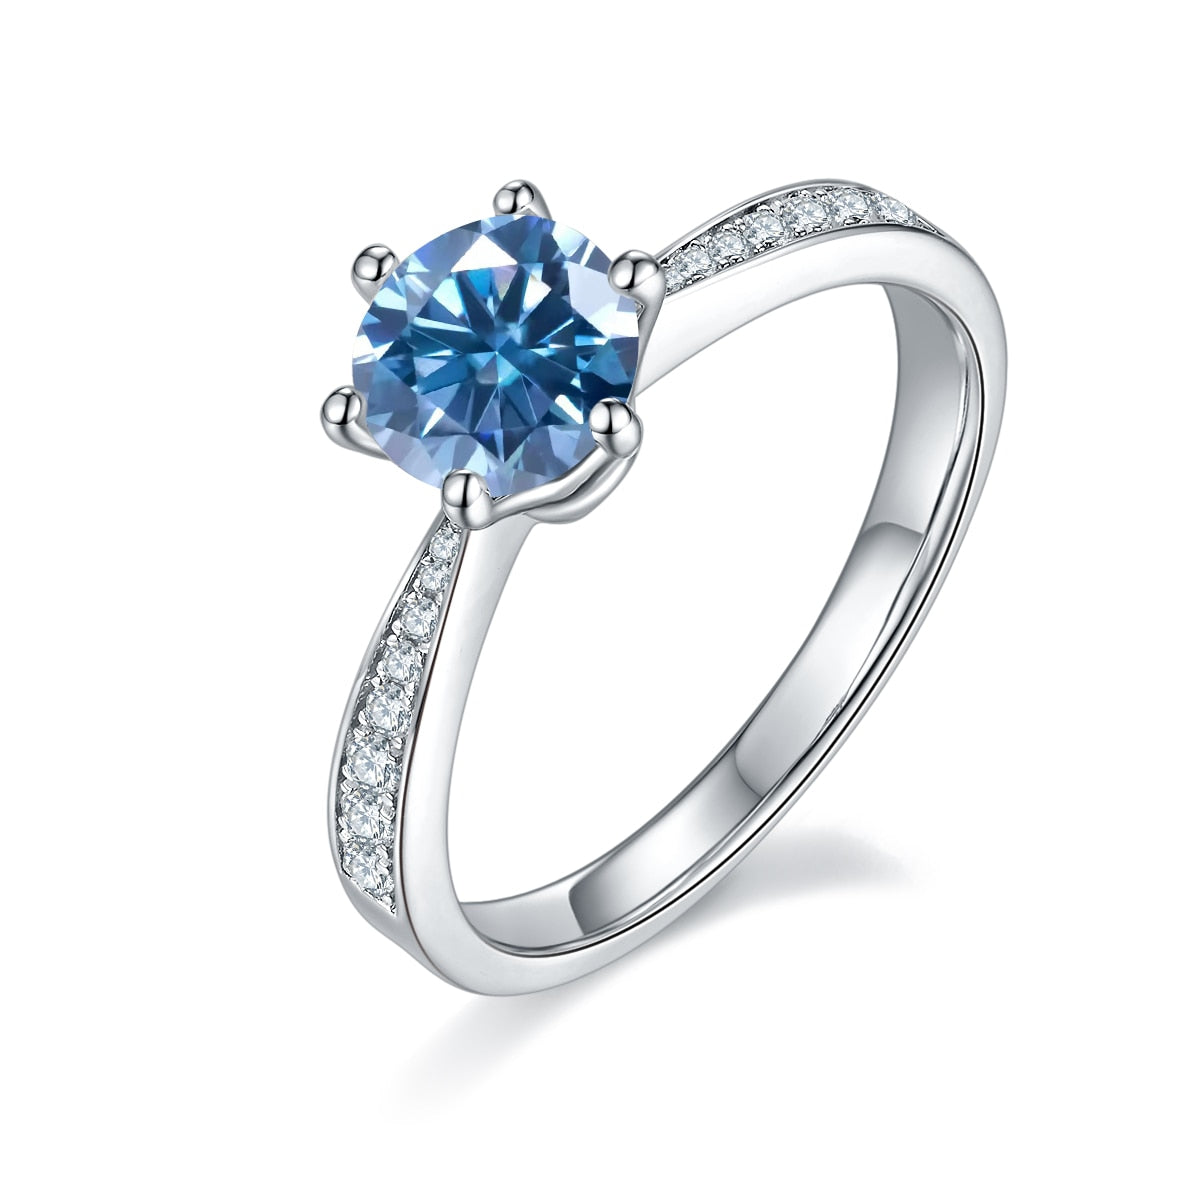 GEM'S BALLET 585 14K 10K 18K Gold 925 SilverJewelry 1ct 2ct 3ct Classic Style Moissanite Ring Wedding Engagement  Ring For Women